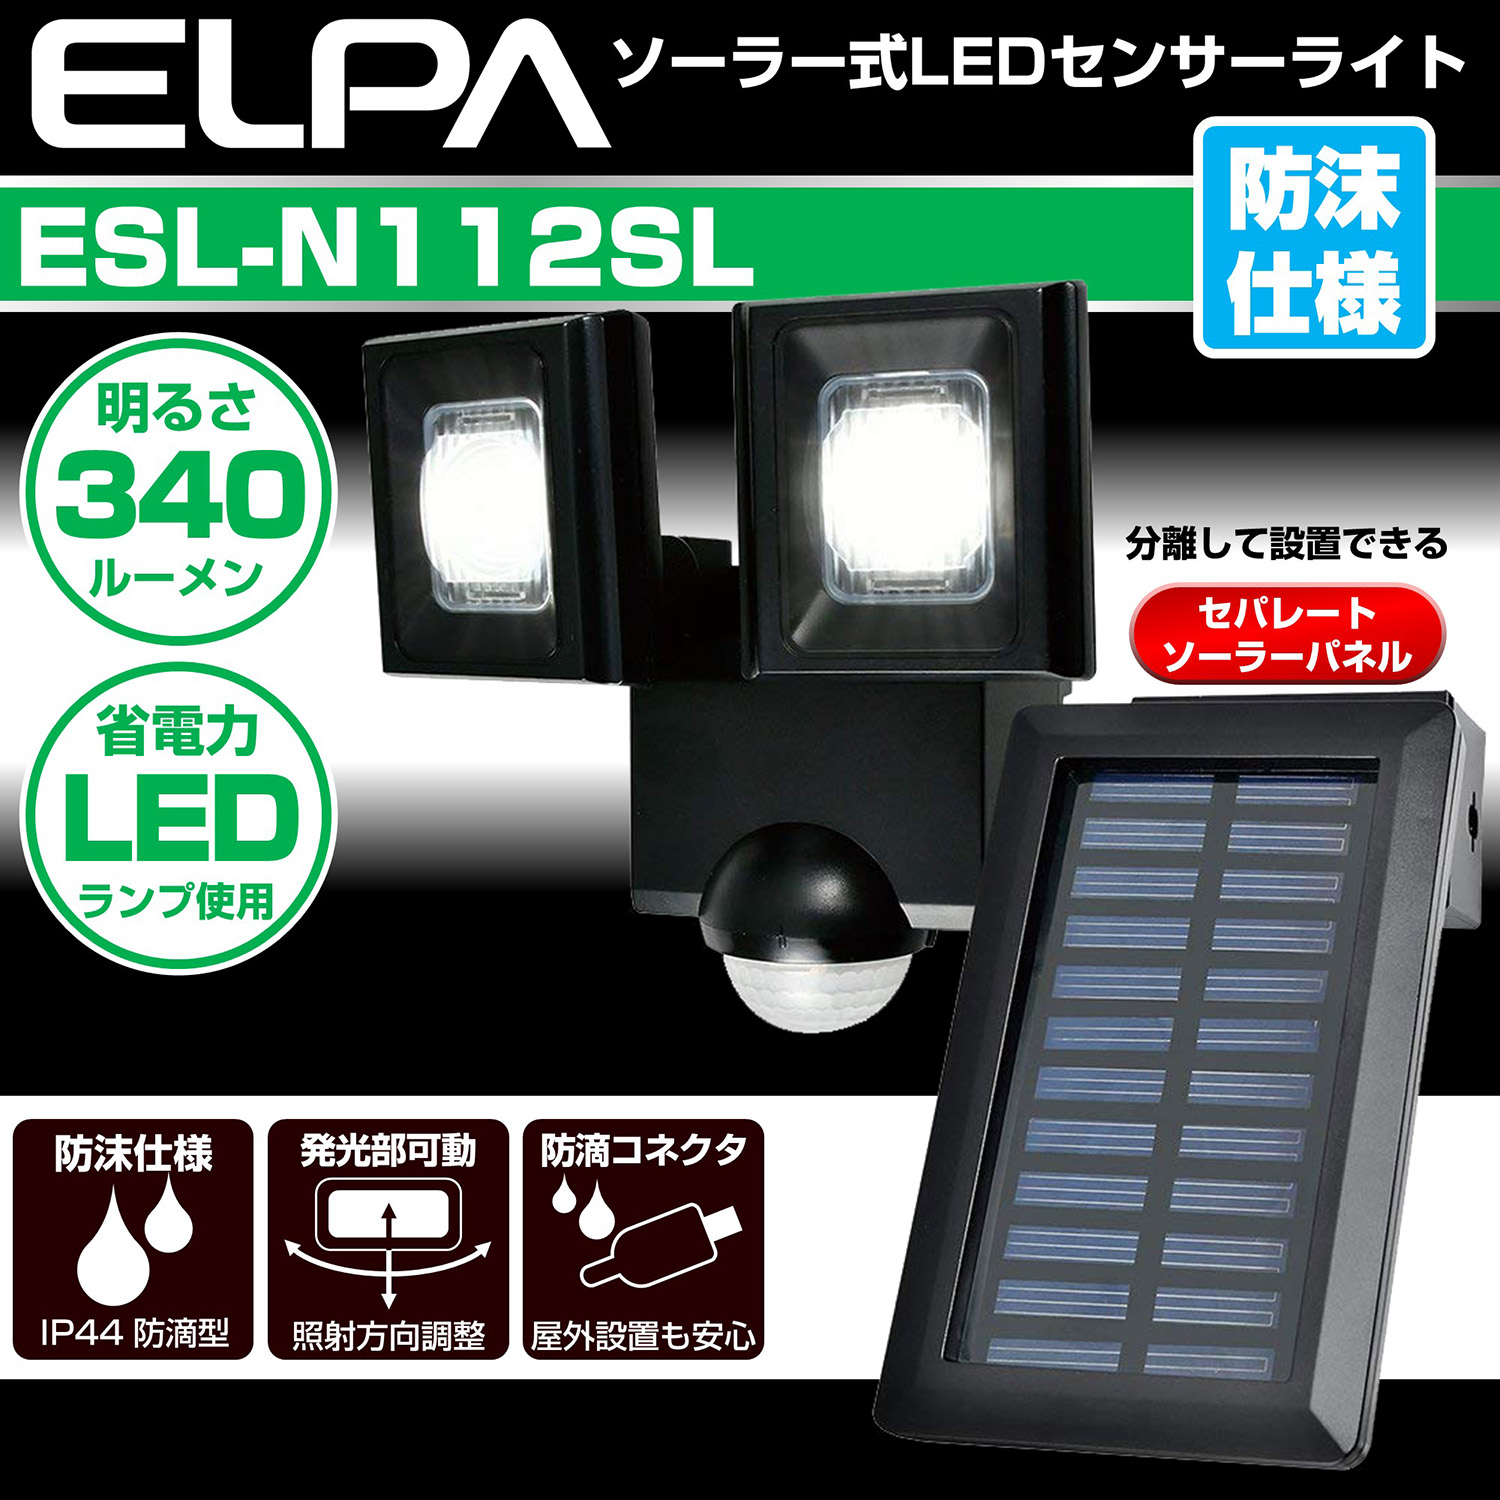 ELPA(エルパ) 屋外用LEDセンサーライト ソーラー発電式 ESL-313SL - 1